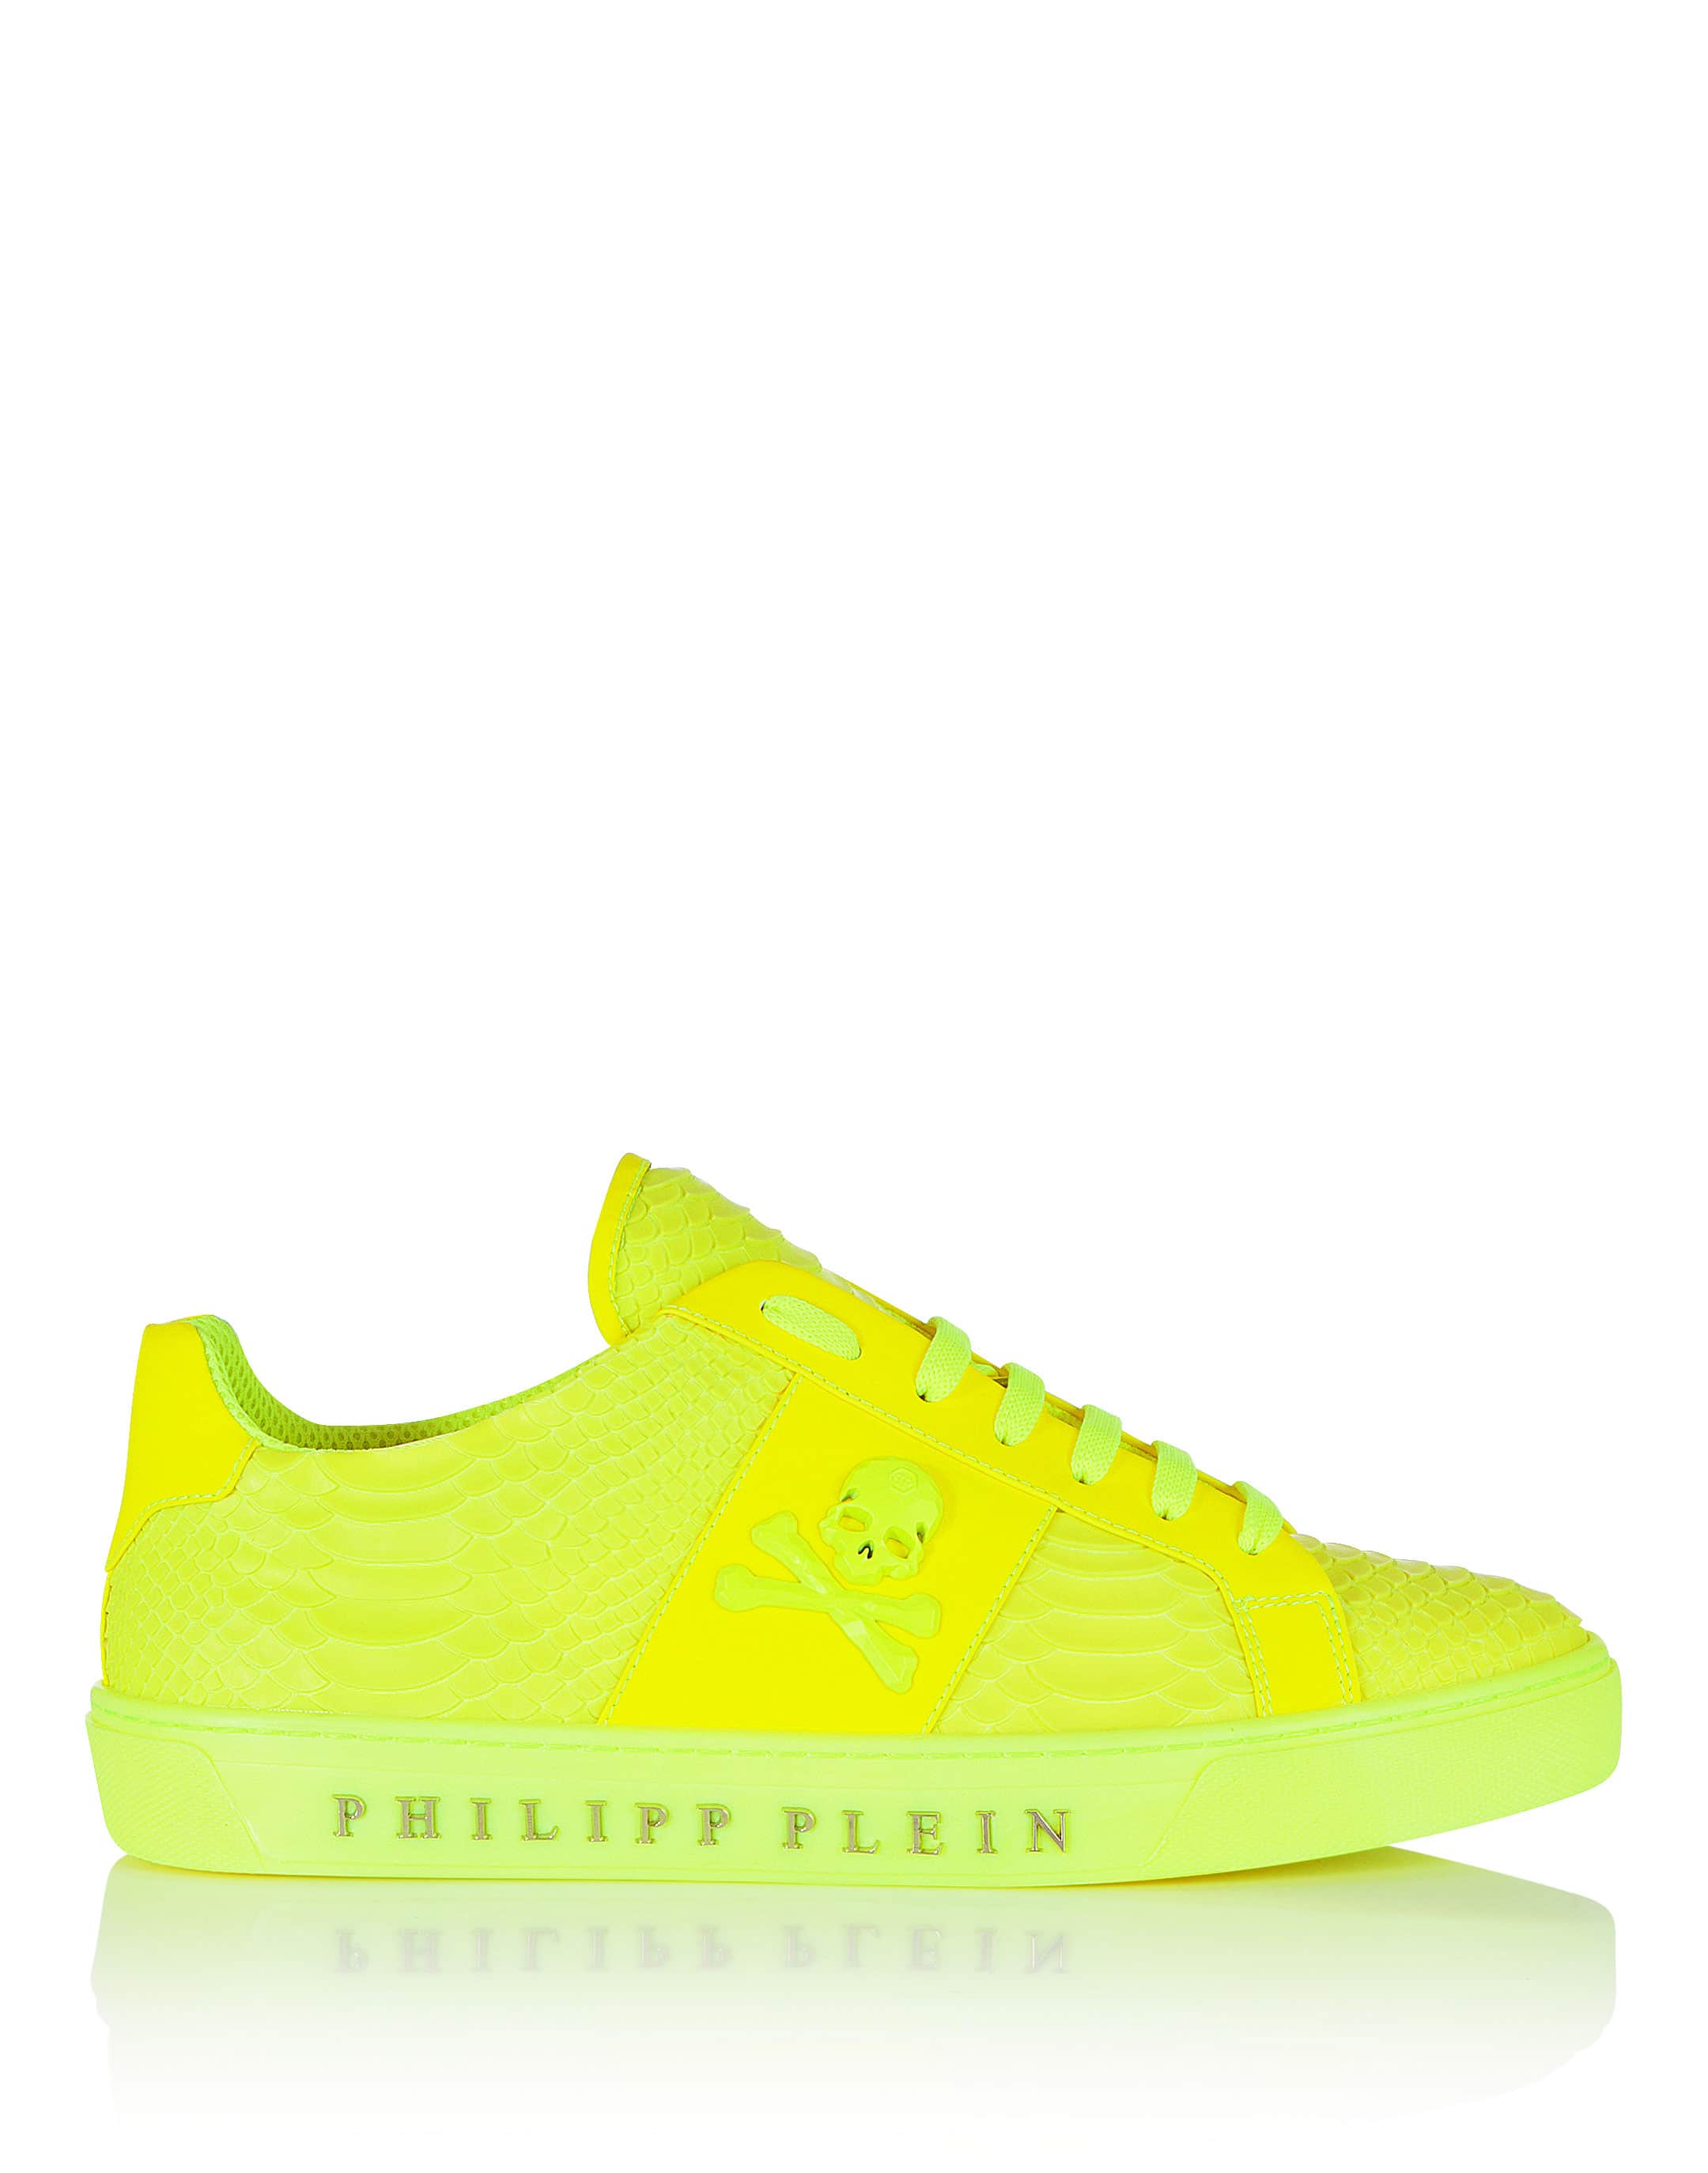 philipp plein yellow shoes